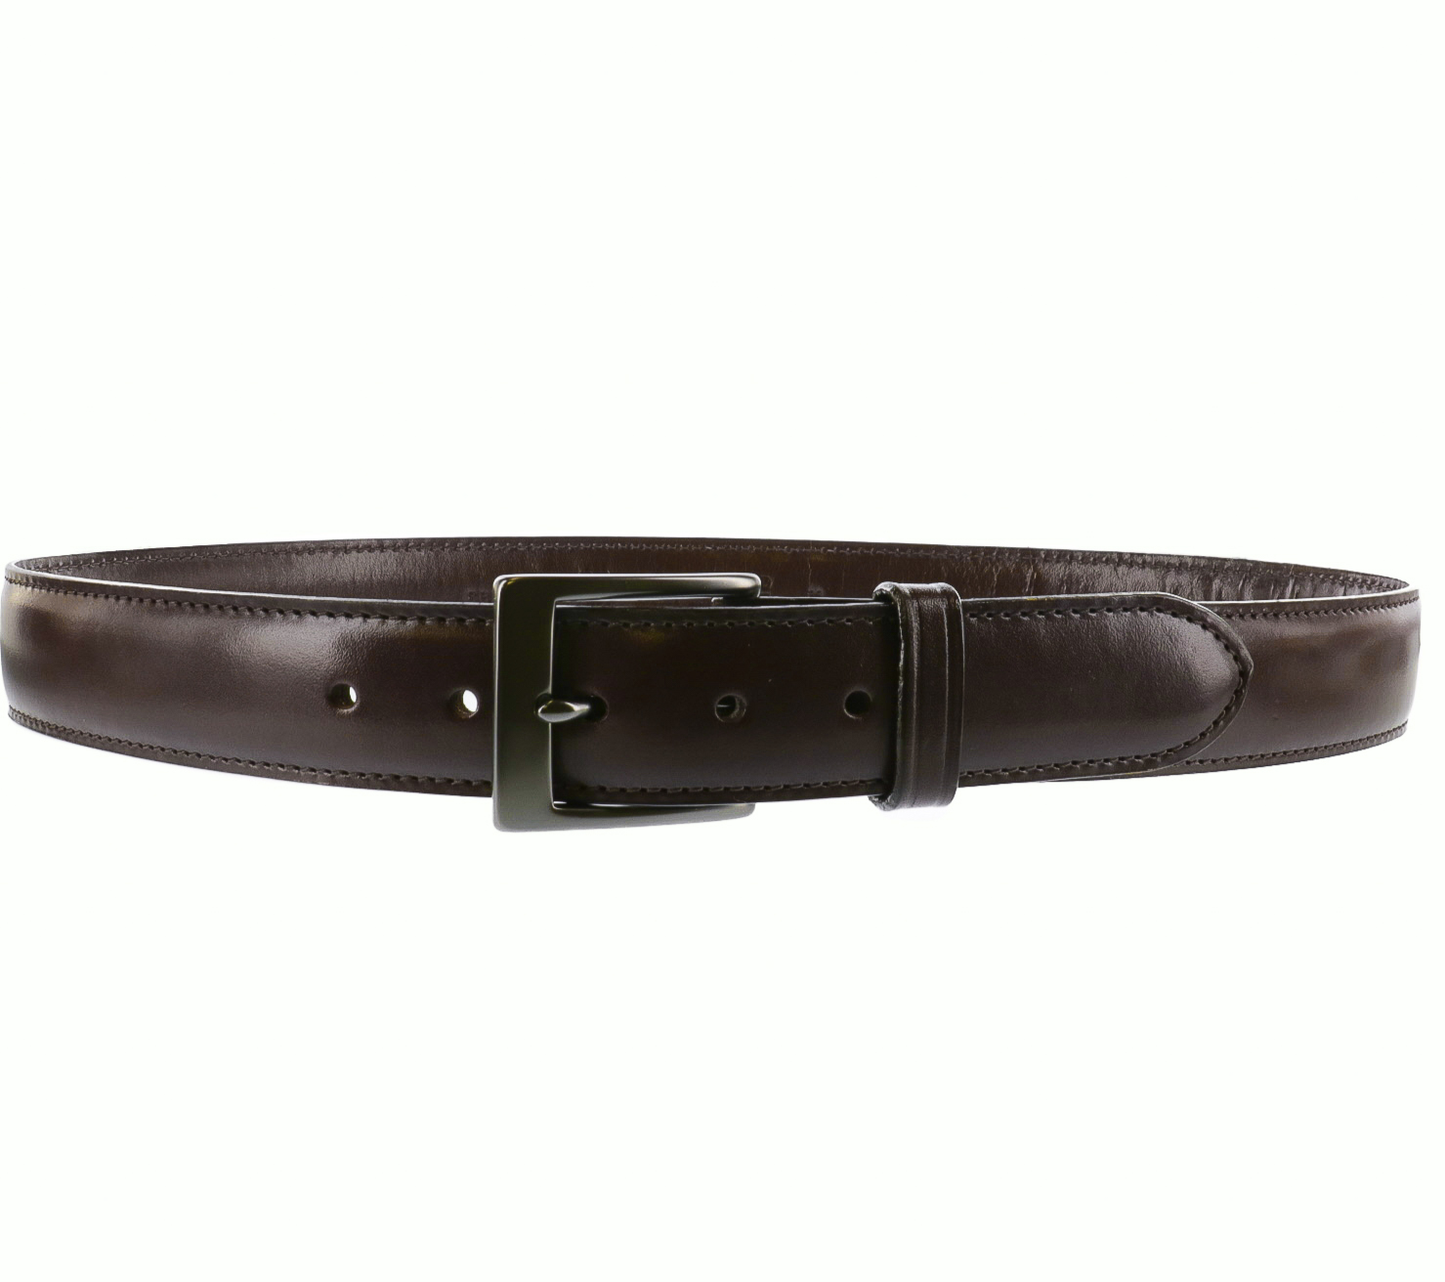 Belts - Galco Gunleather SB3 Dress Belt